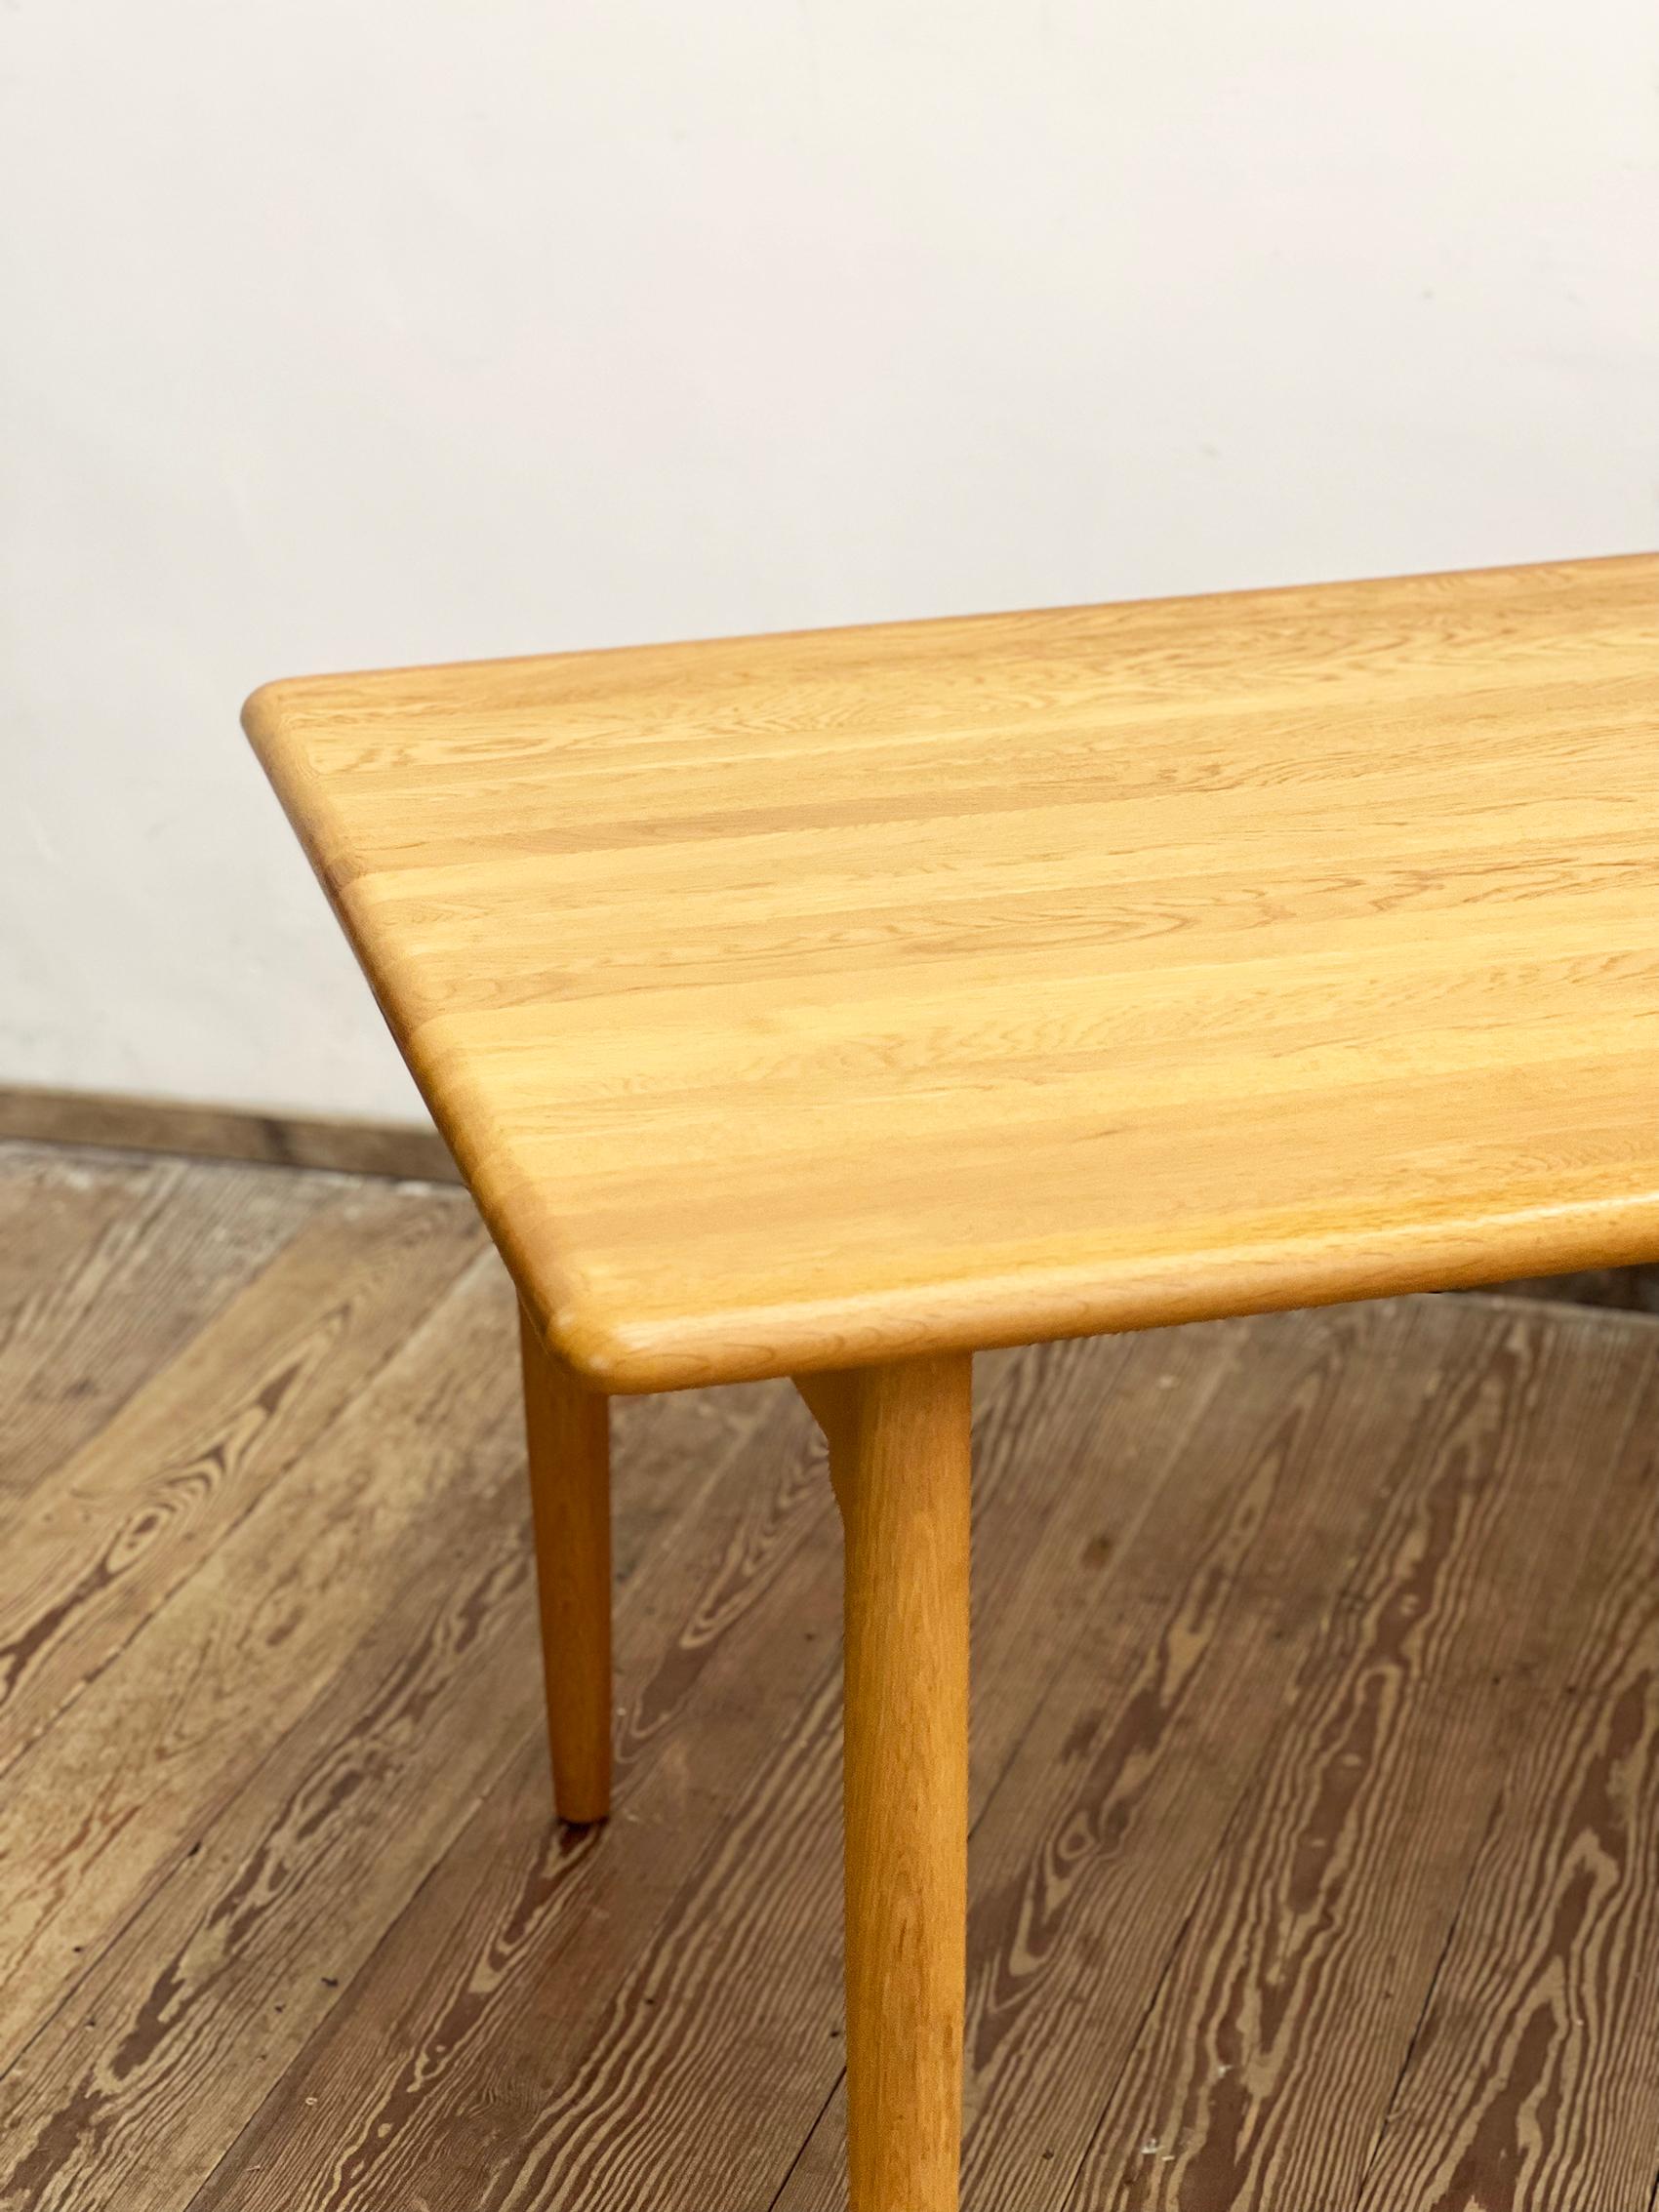 Mid-Century Dining Table, Danish Design out of massiv Oak Wood, Denmark, 1960s For Sale 2